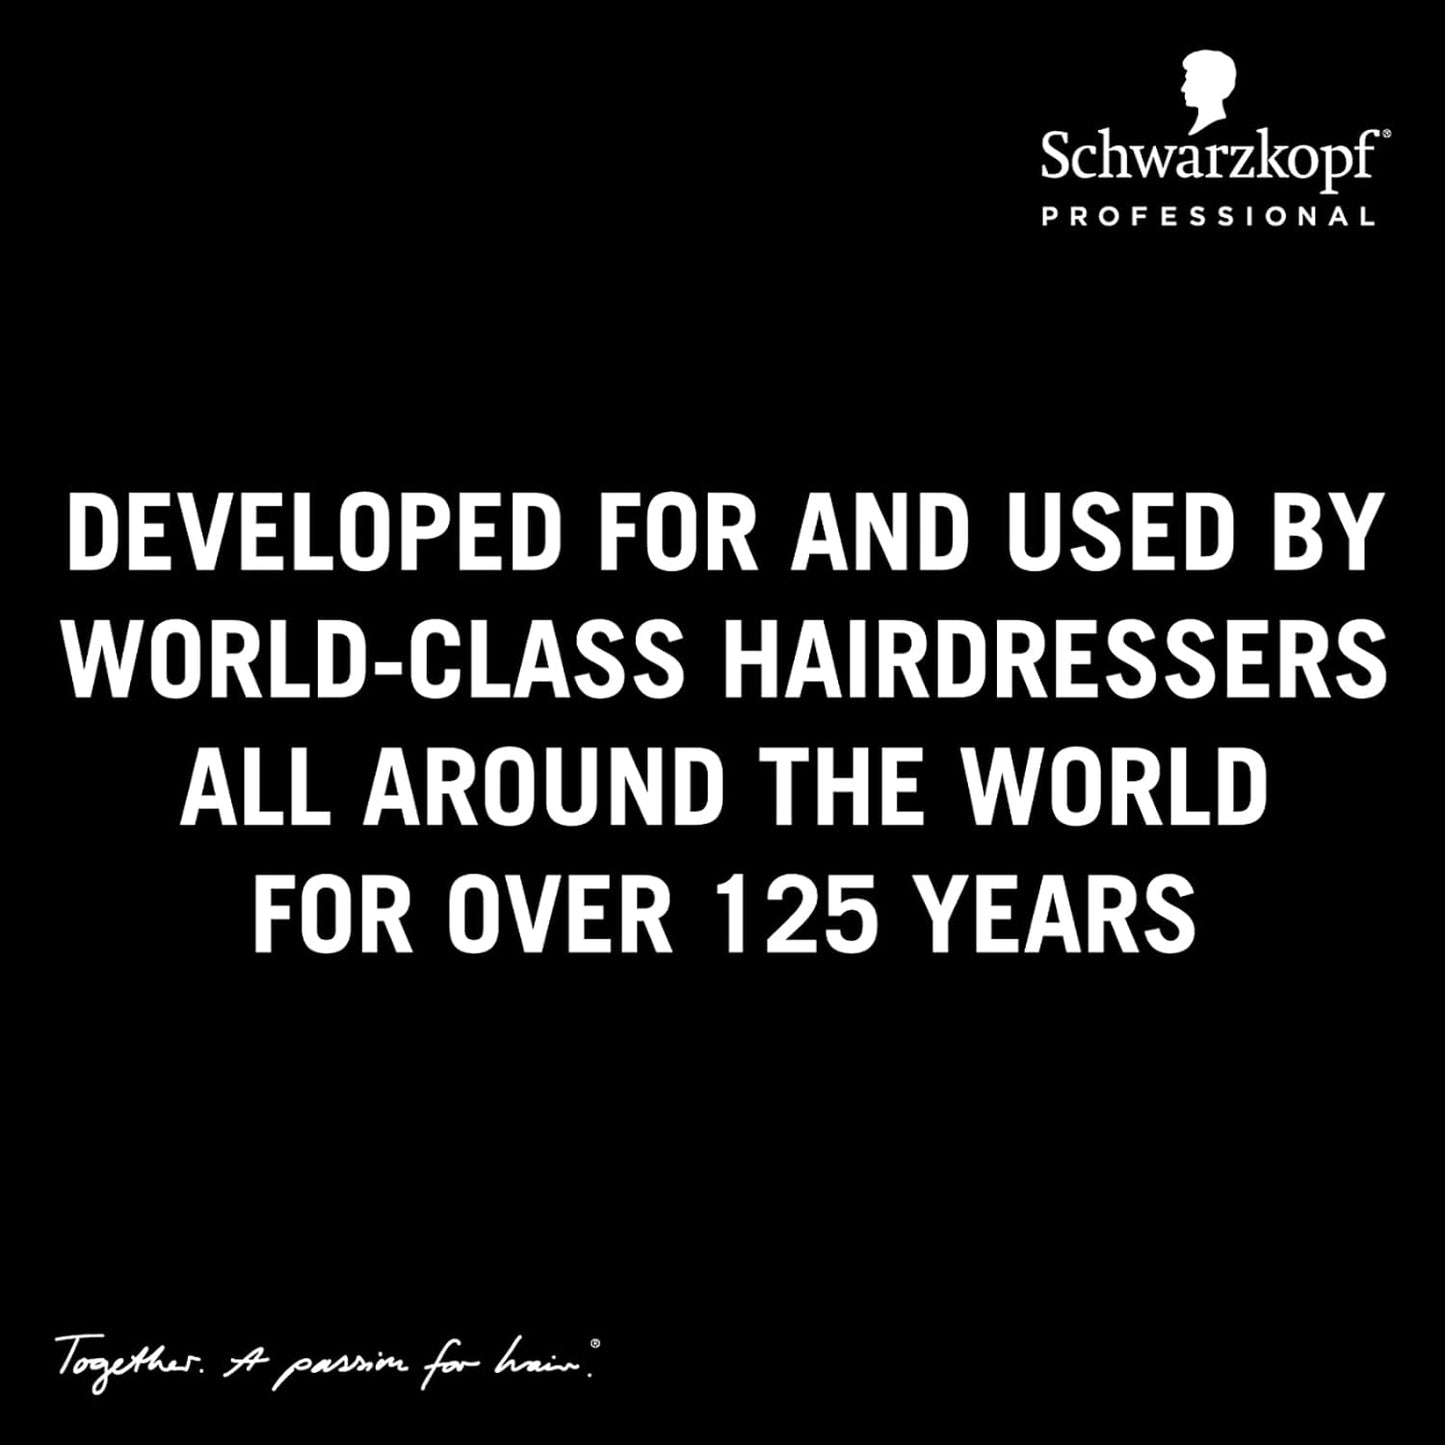 Schwarzkopf Professional Osis+ Flexwax Hairwax for Men